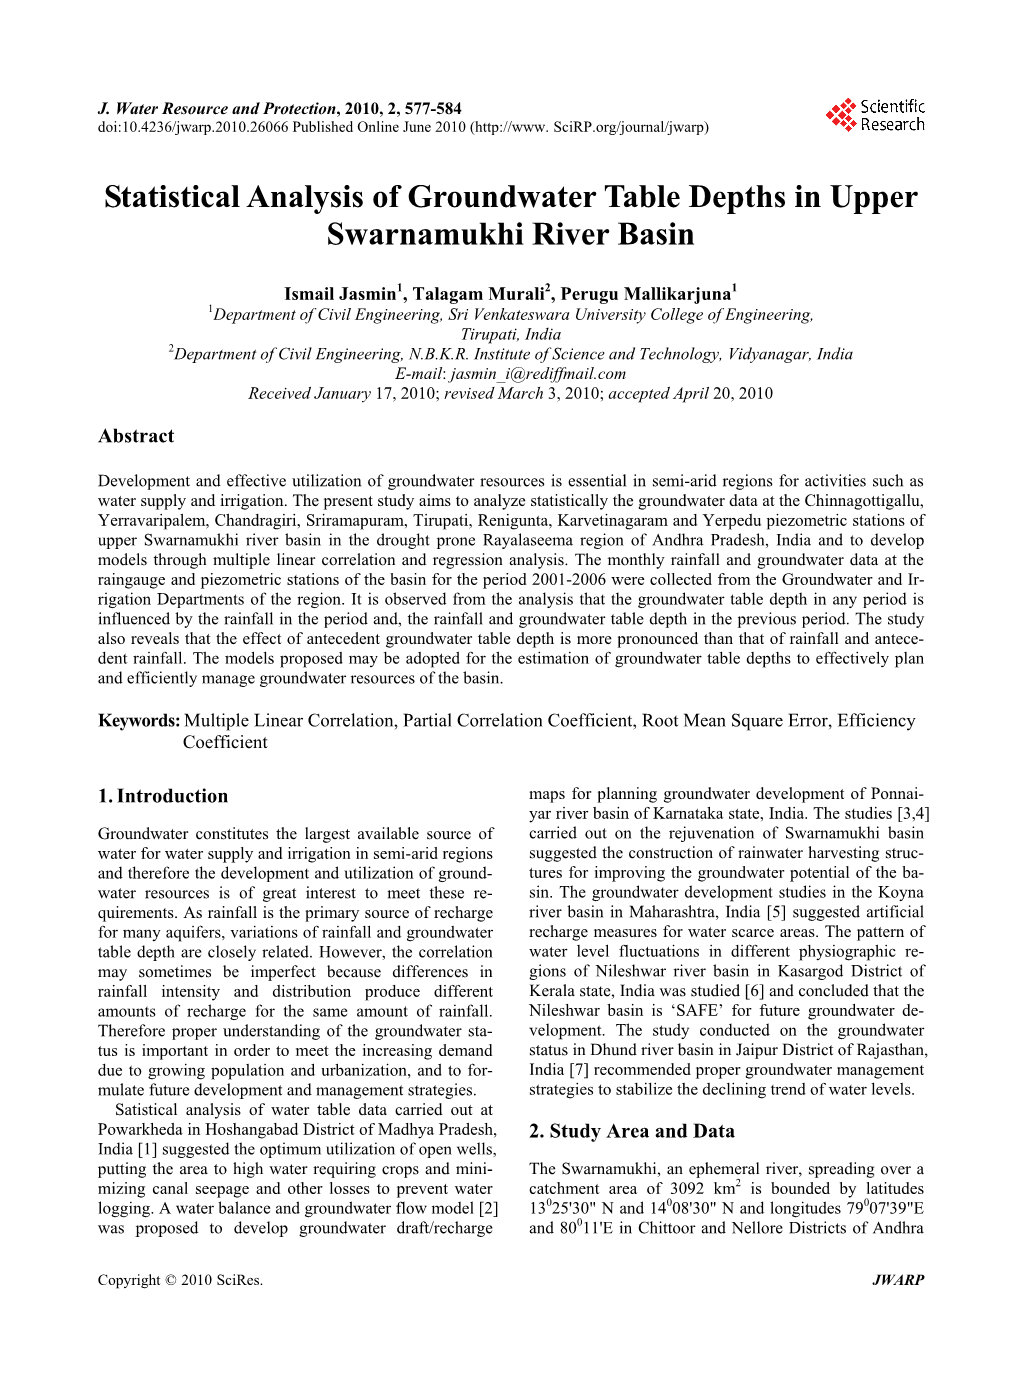 Statistical Analysis of Groundwater Table Depths in Upper Swarnamukhi River Basin